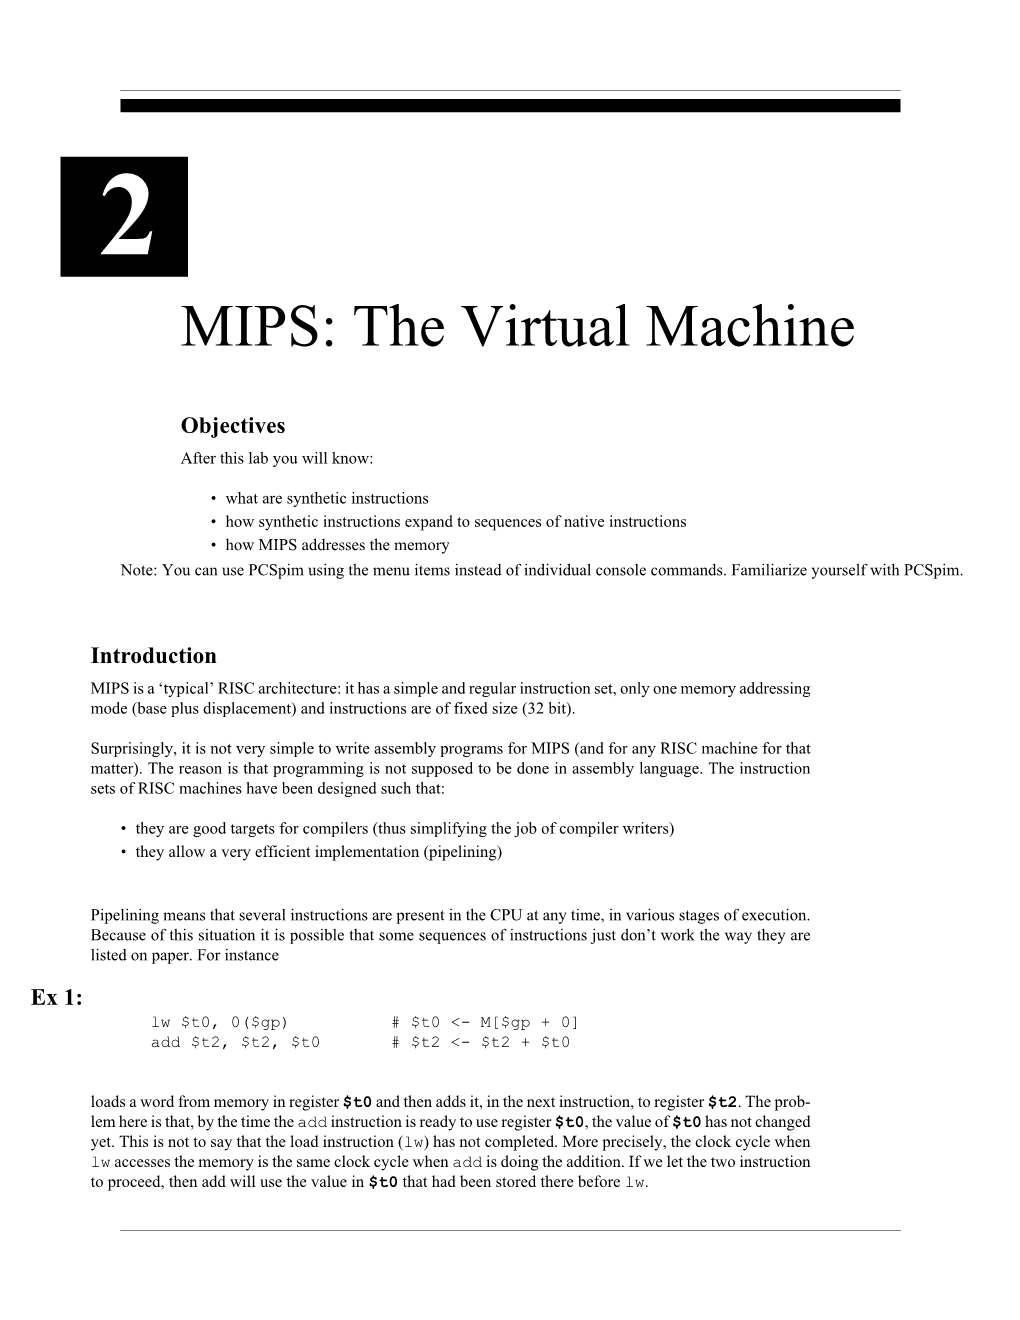 MIPS: the Virtual Machine